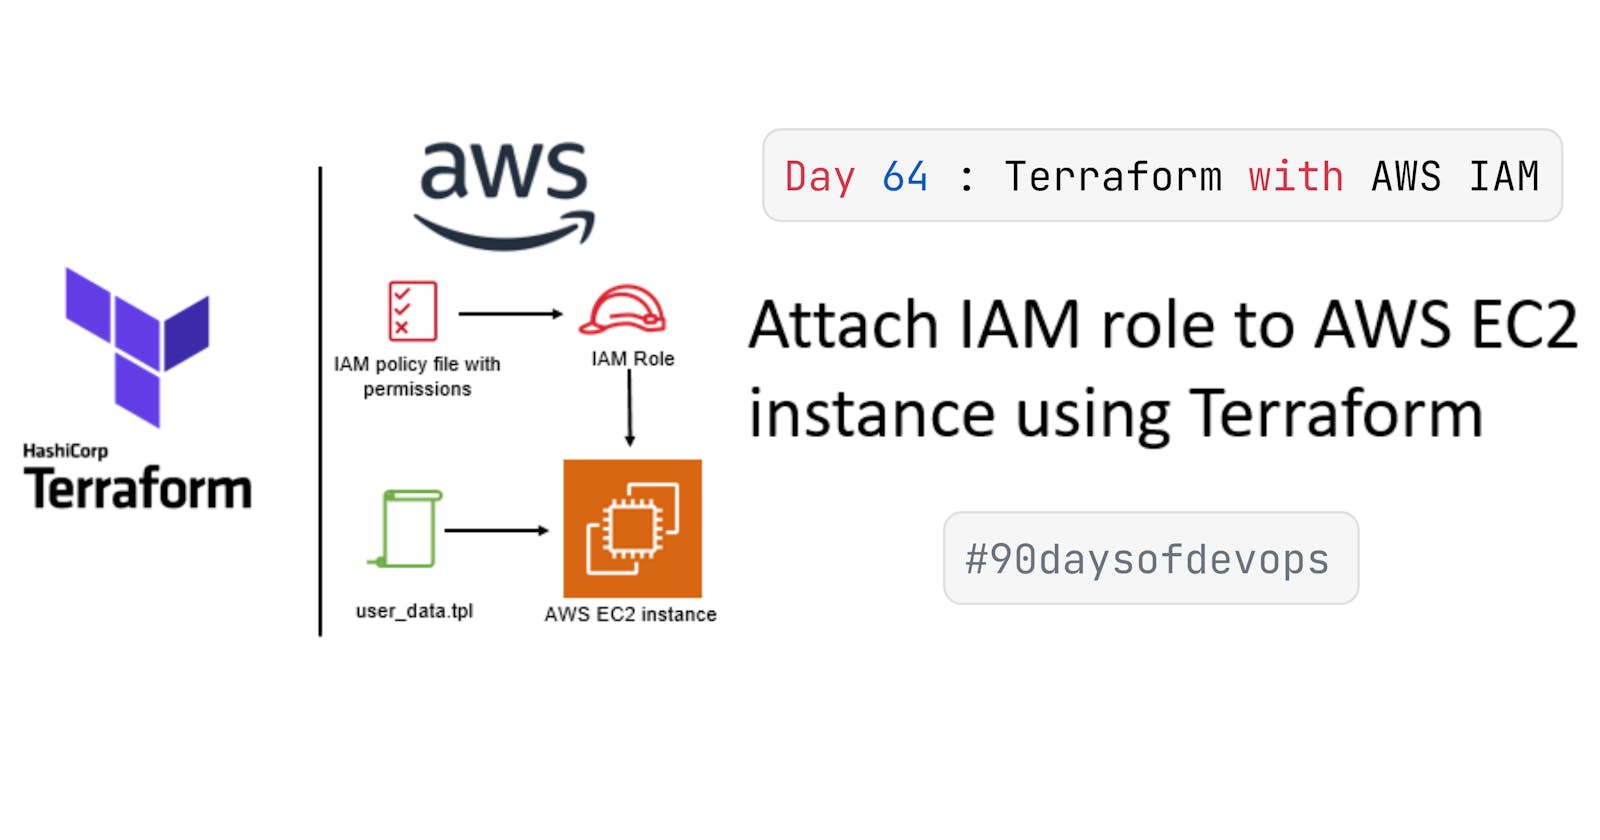 Day 64 : Terraform with AWS